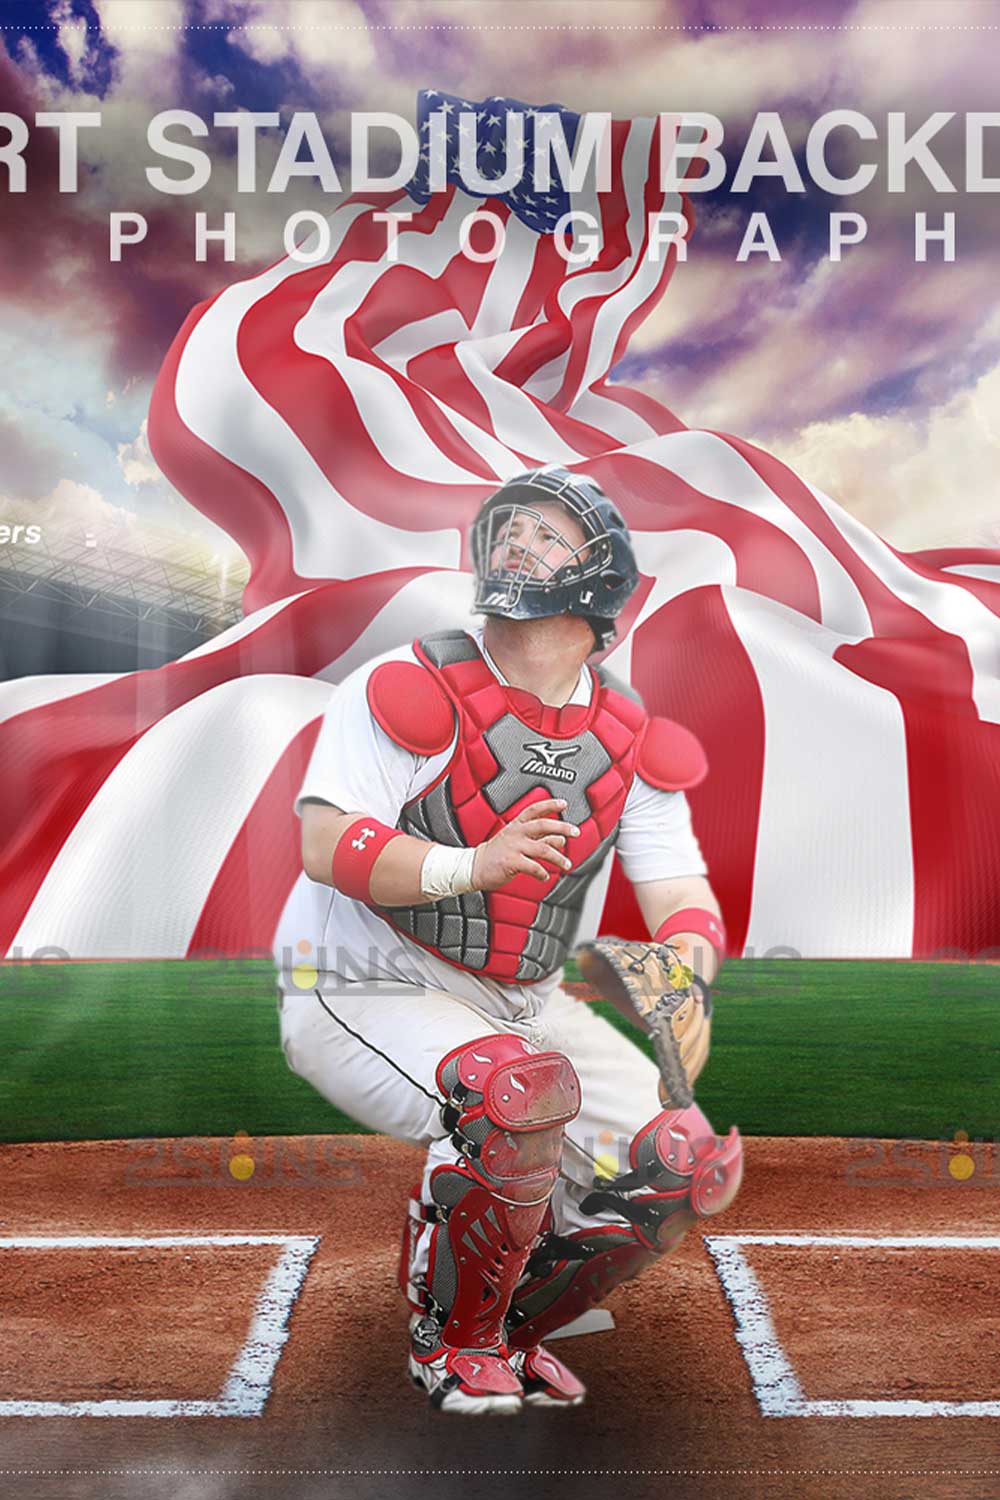 Baseball USA Flag Backdrop Sports Digital Background Pinterest Image.